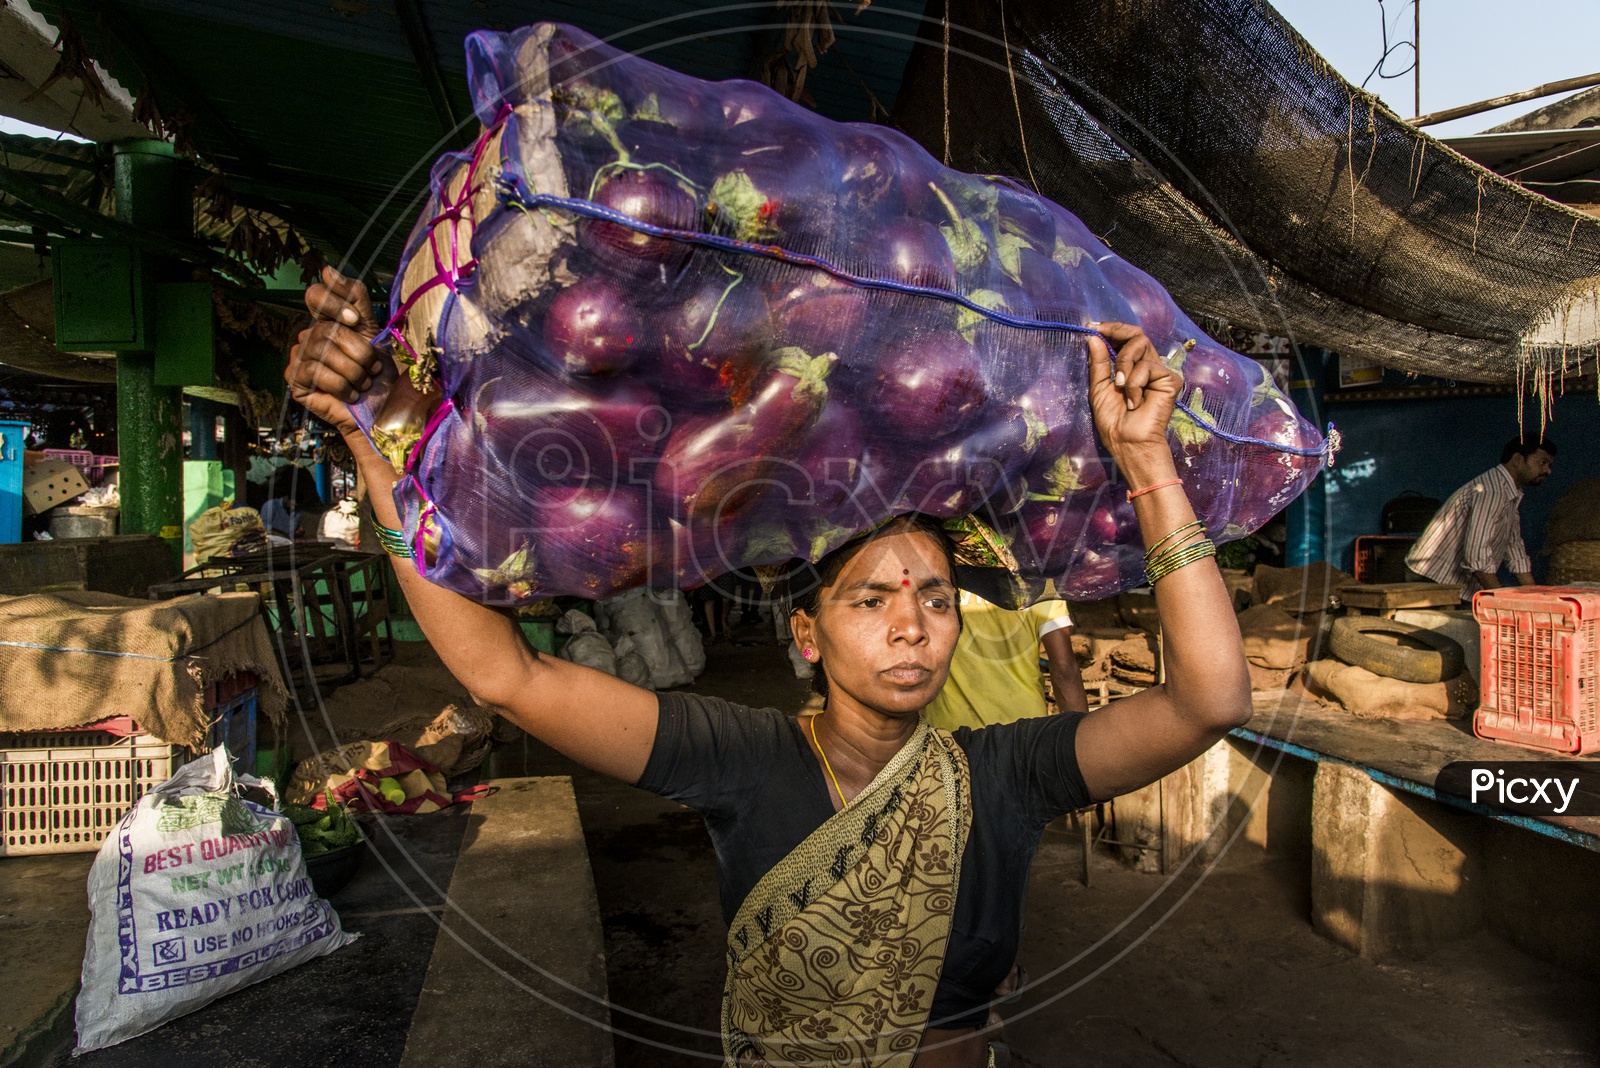 Lady Worker in Monda Market, Hyderabad